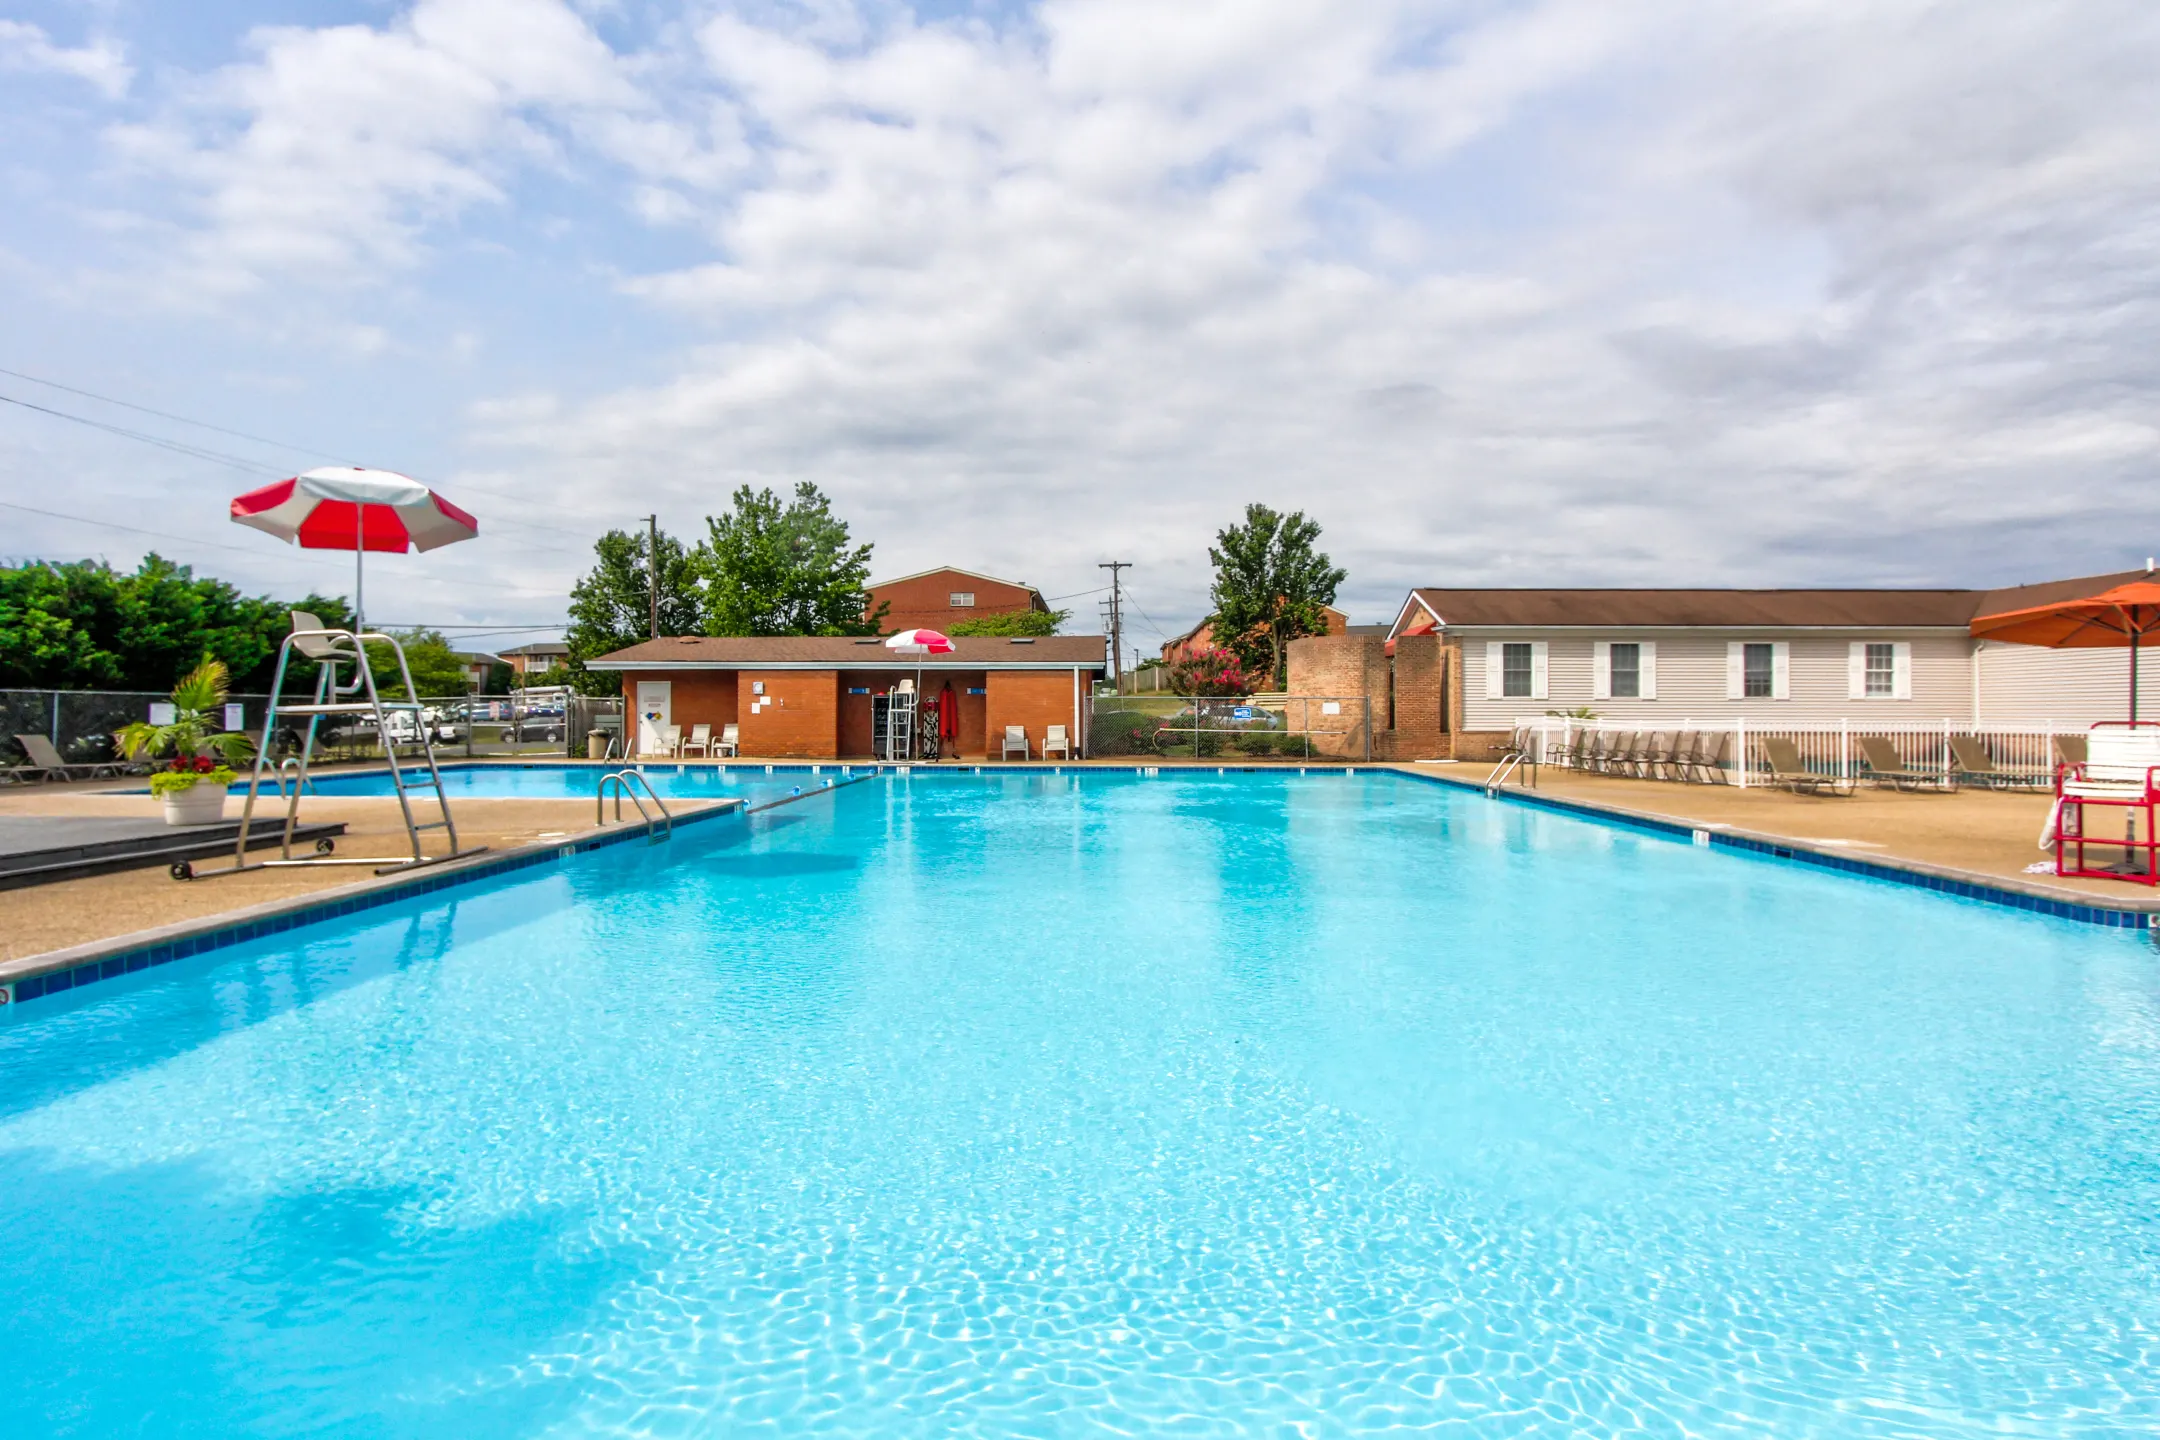 Pool - Westgate Apartments And Townhomes - Manassas, VA